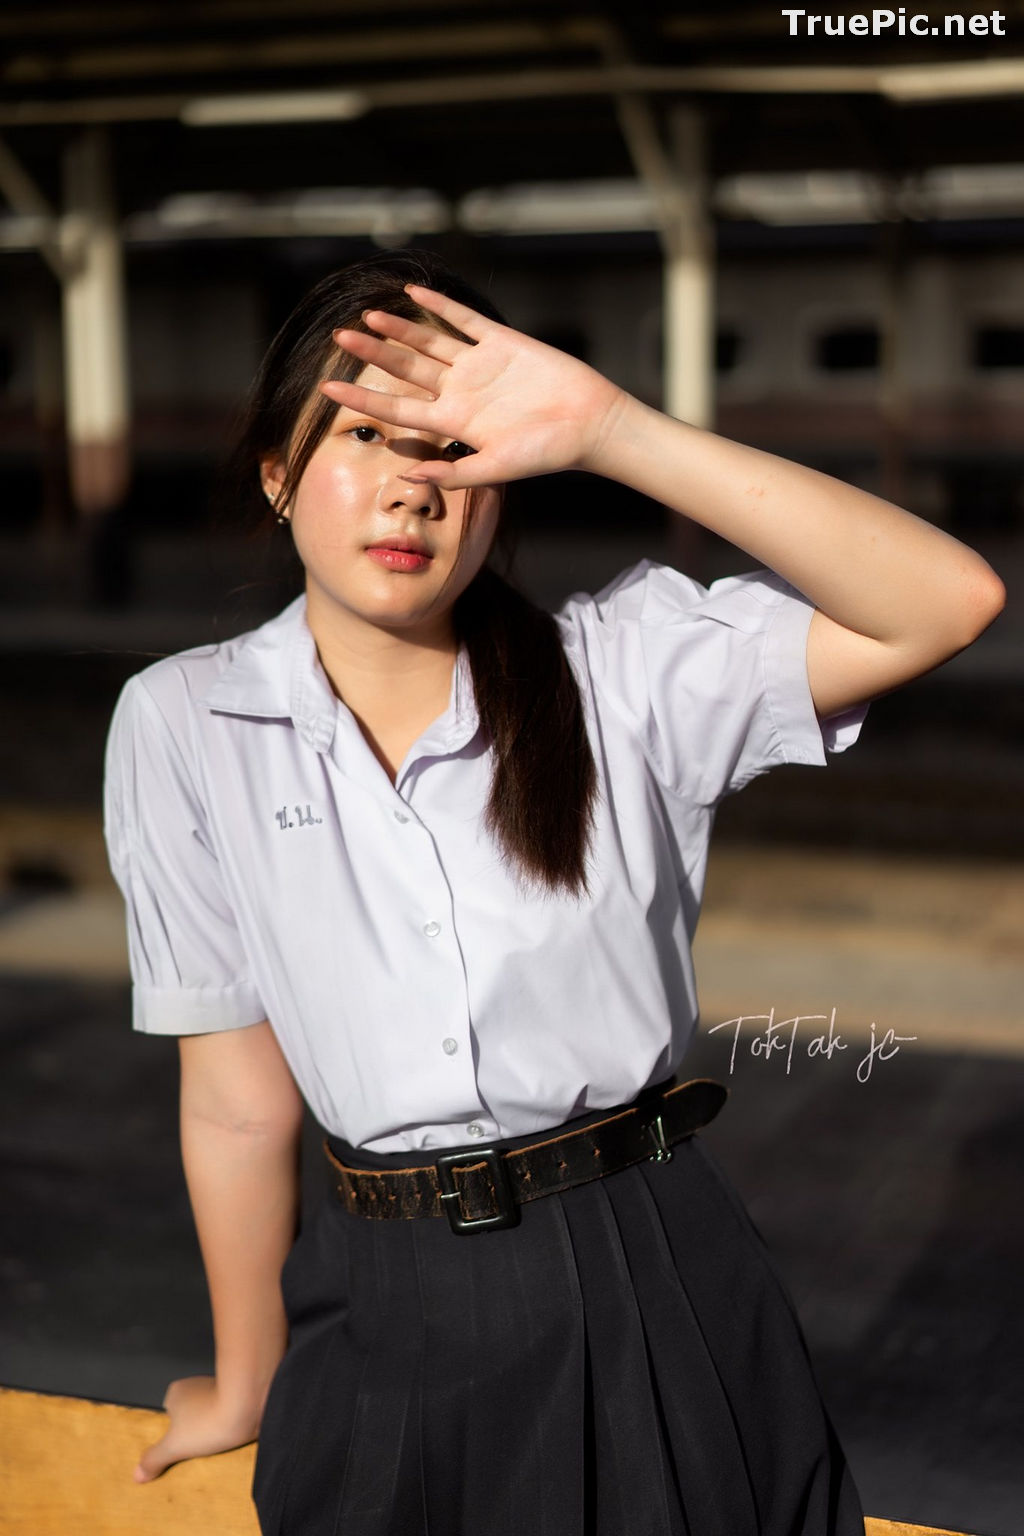 Image Thailand Model - Kornrawee Chokejindachai - Cute Student Girl - TruePic.net - Picture-19